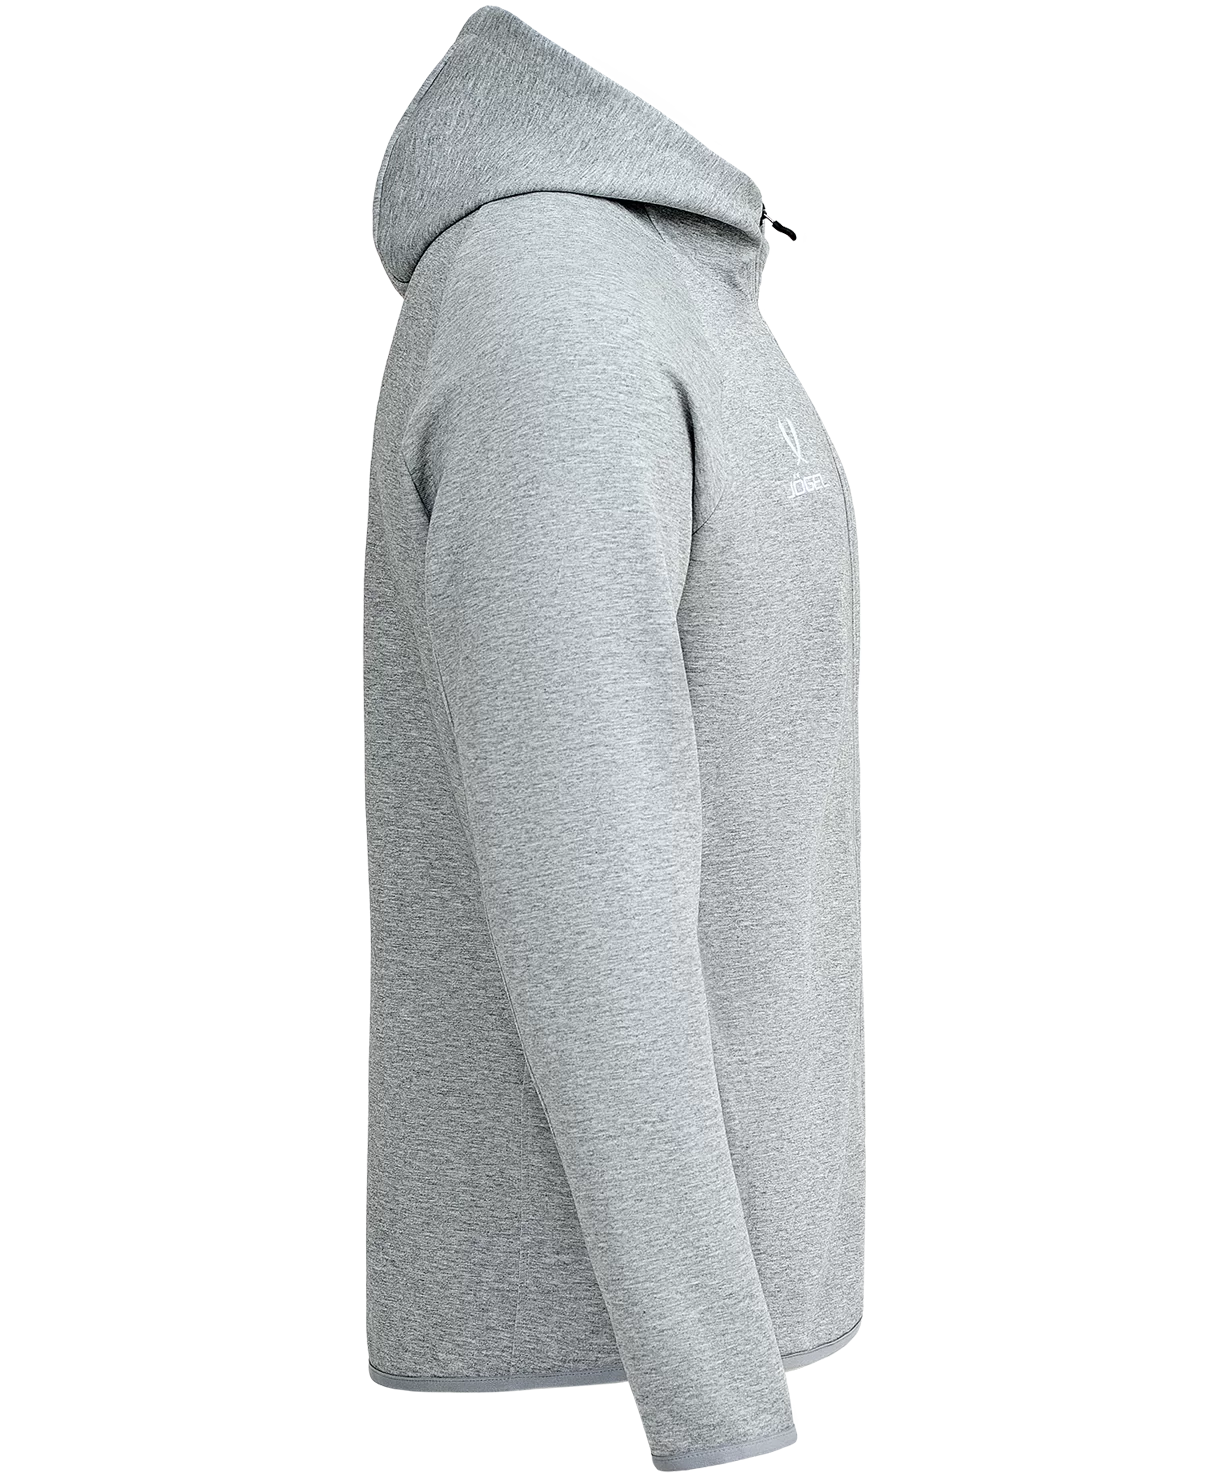 Реальное фото Худи на молнии ESSENTIAL Athlete Hooded FZ Jacket, серый от магазина СпортСЕ